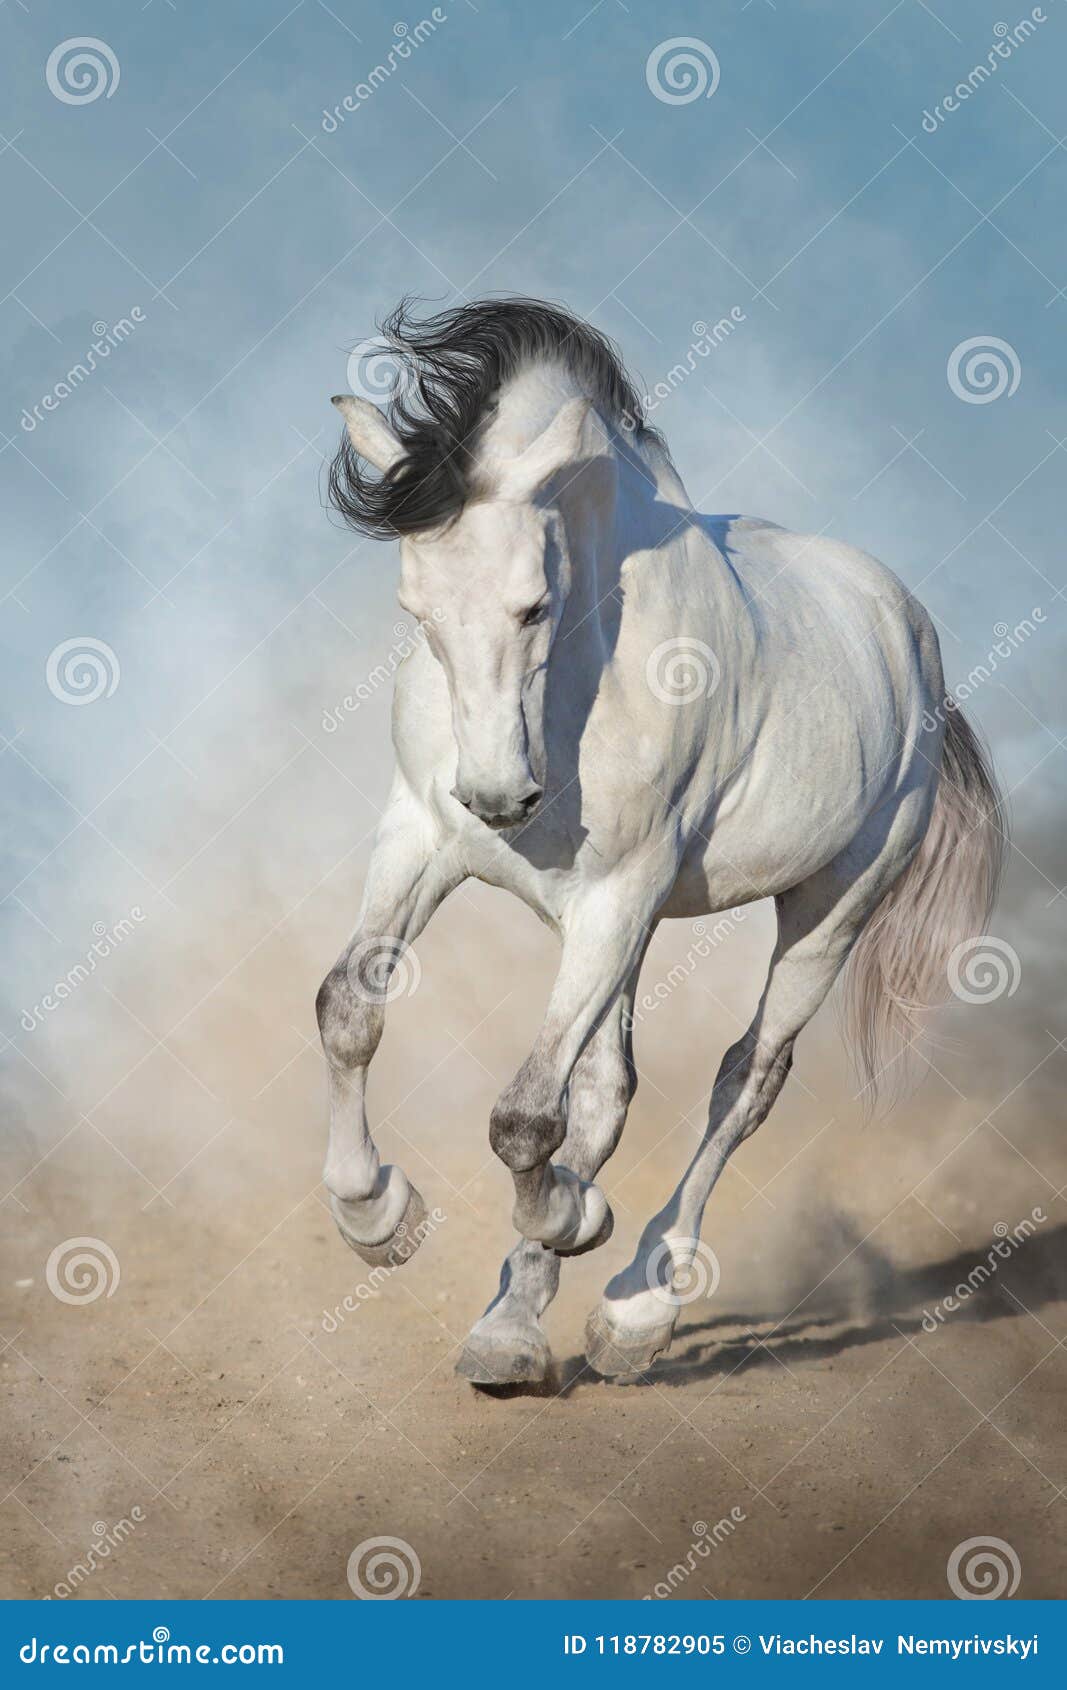 white horse run gallop